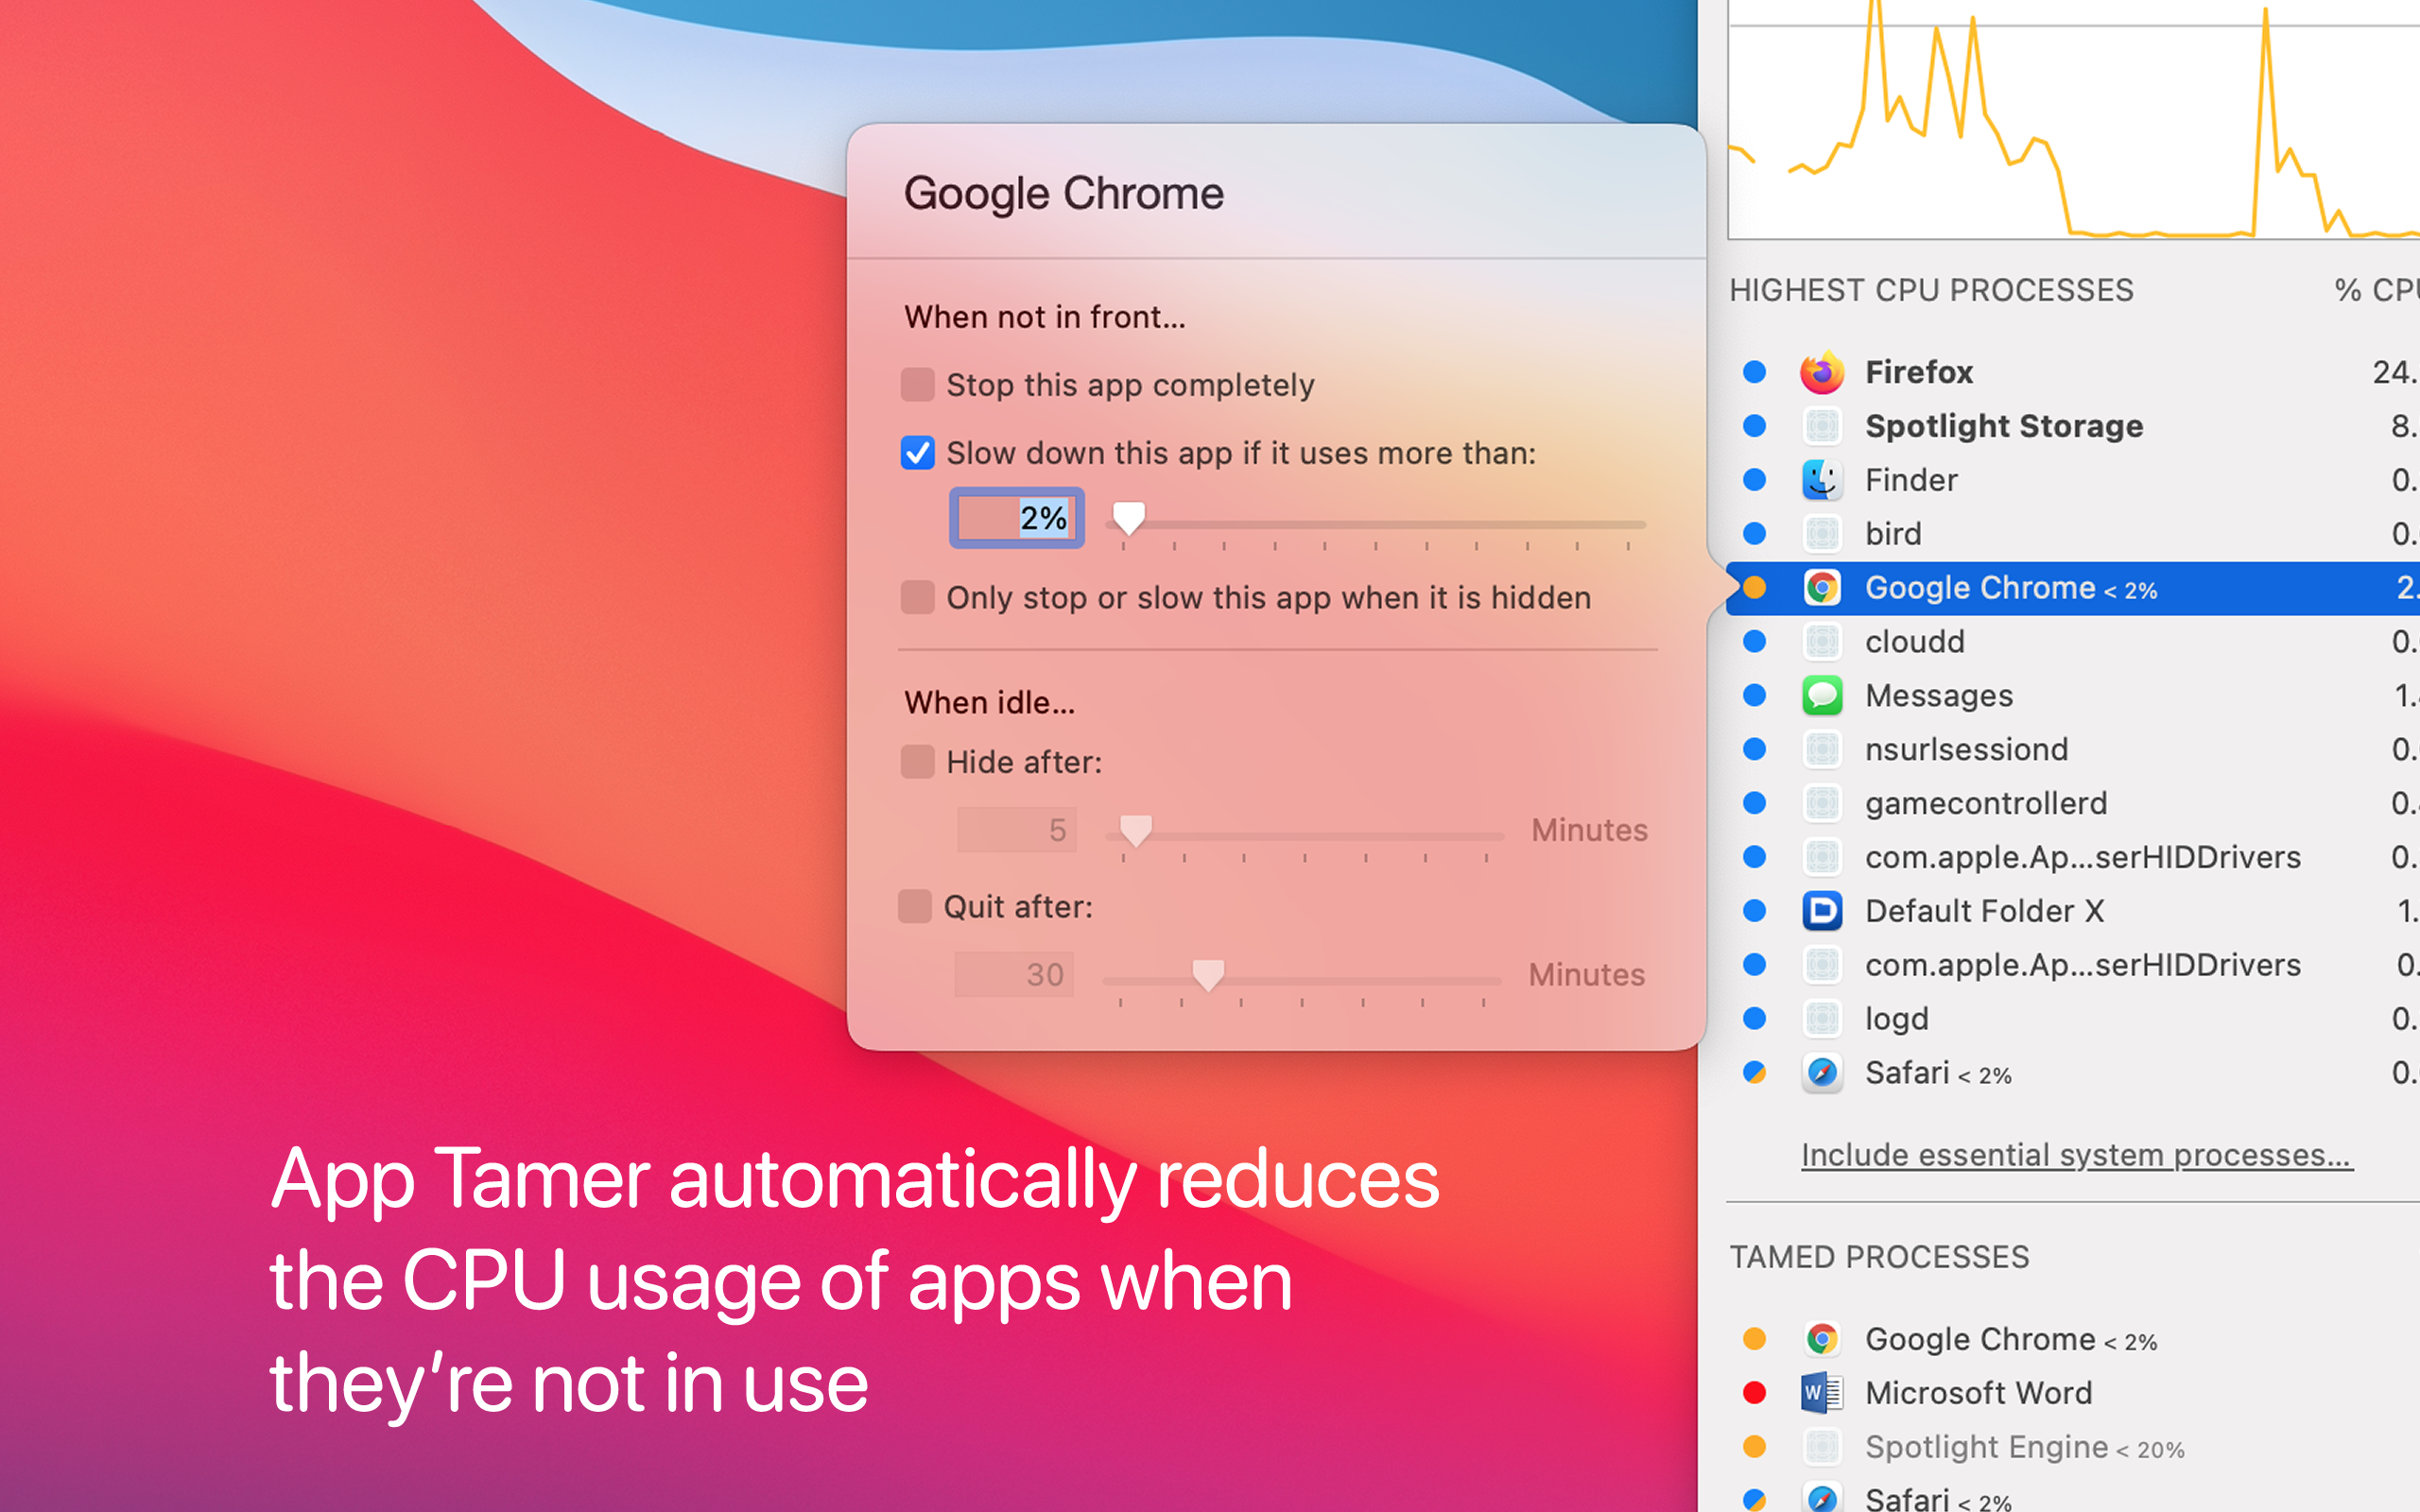 app tamer in app store